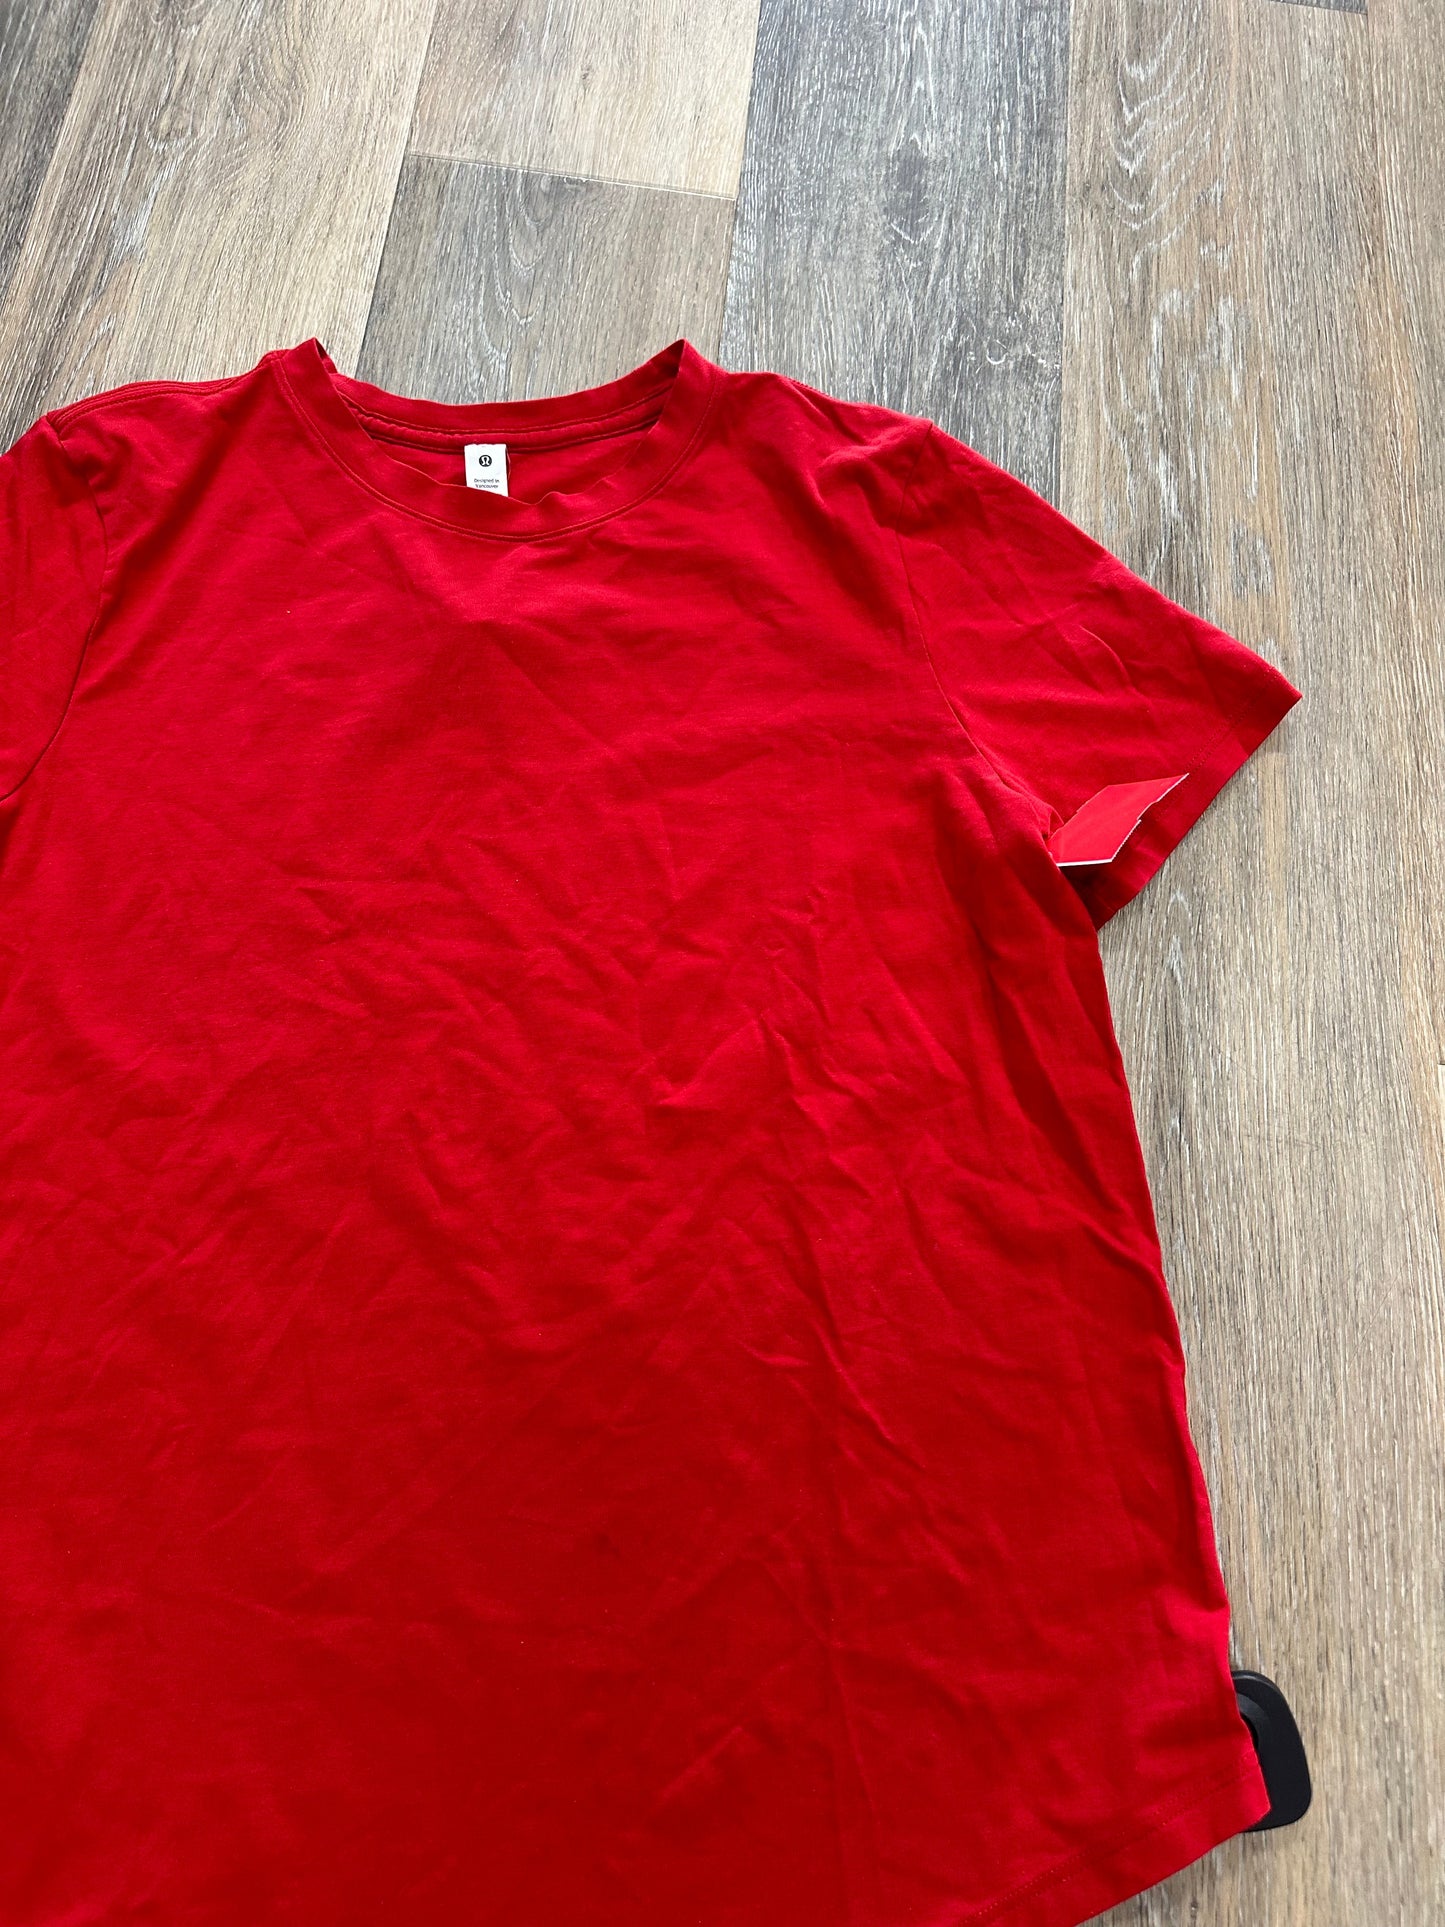 Red Athletic Top Short Sleeve Lululemon, Size 6